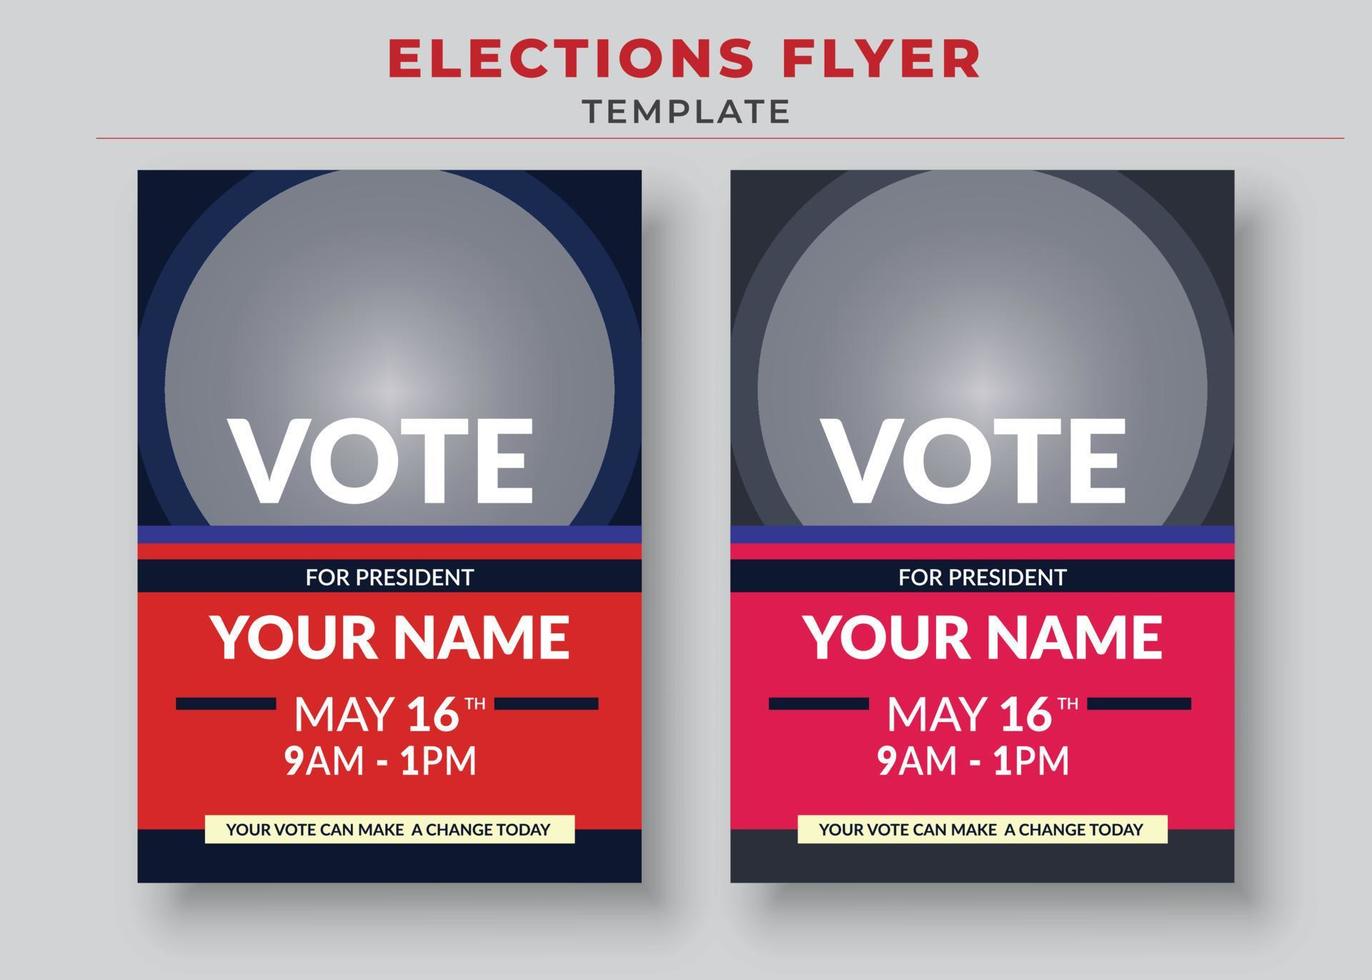 Elections Flyer Template, Political Flyer, Vote Flyer vector